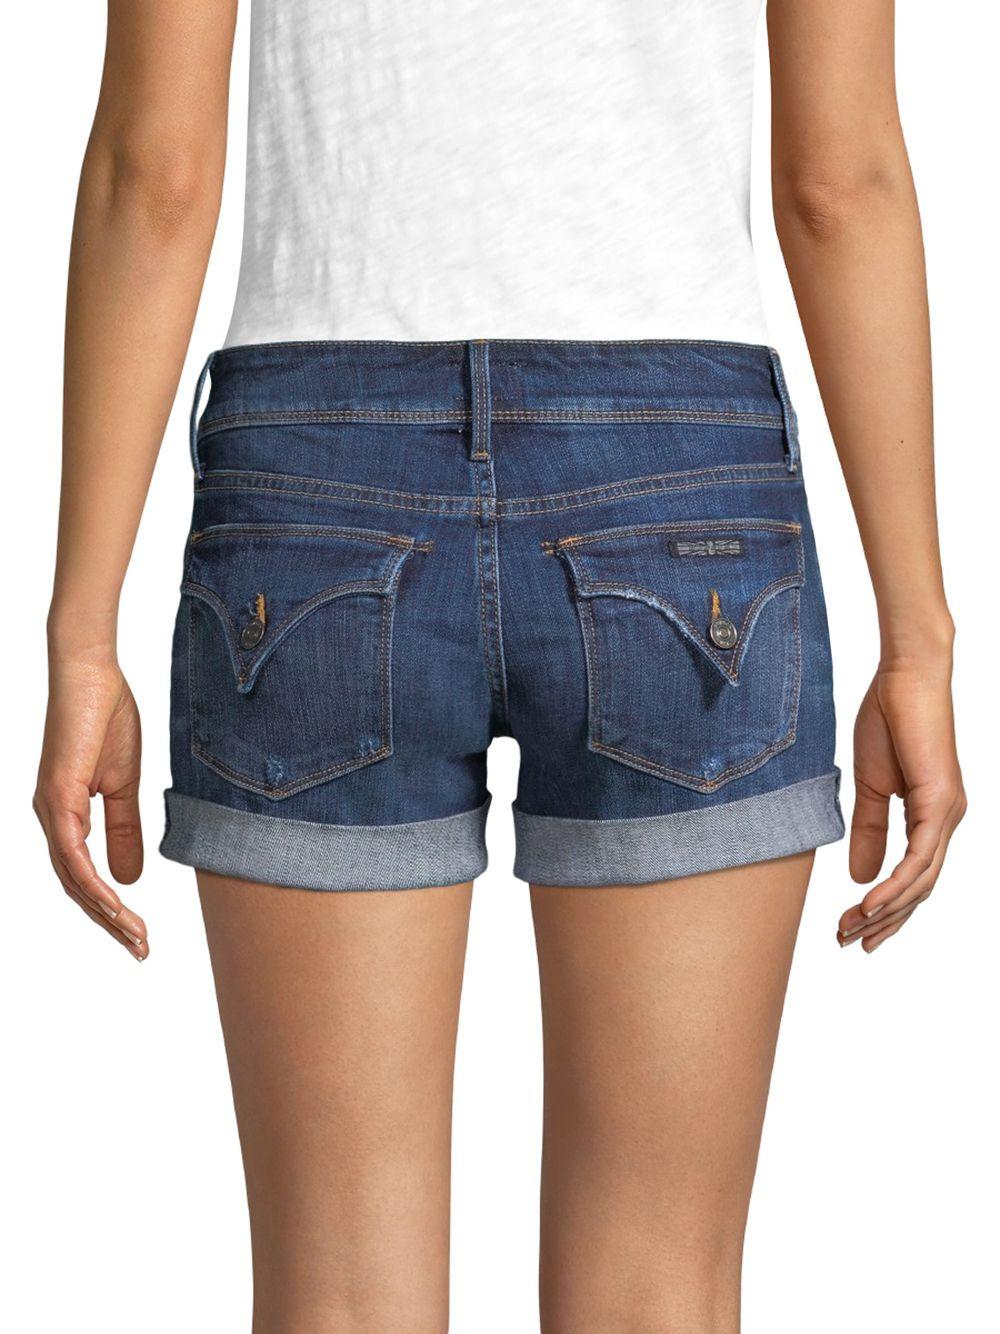 Details about   Cool Blue Striped Denim jean 4 pocket zip button Close Cut off short shorts New 